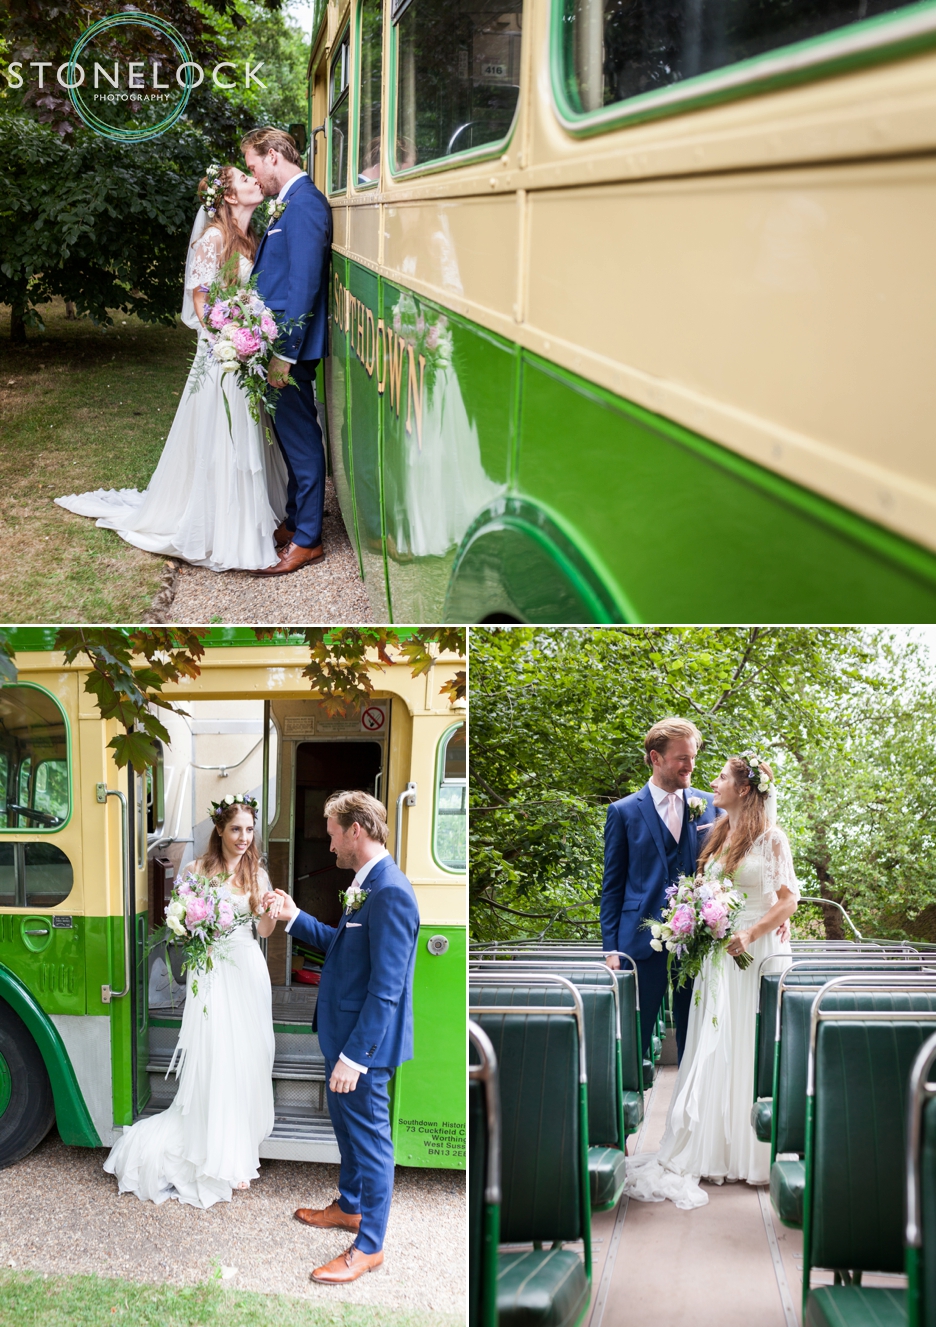 Wedding photography at Ridge Farm Studios, Dorking, Surrey, the bride & groom pose with their wedding bus!